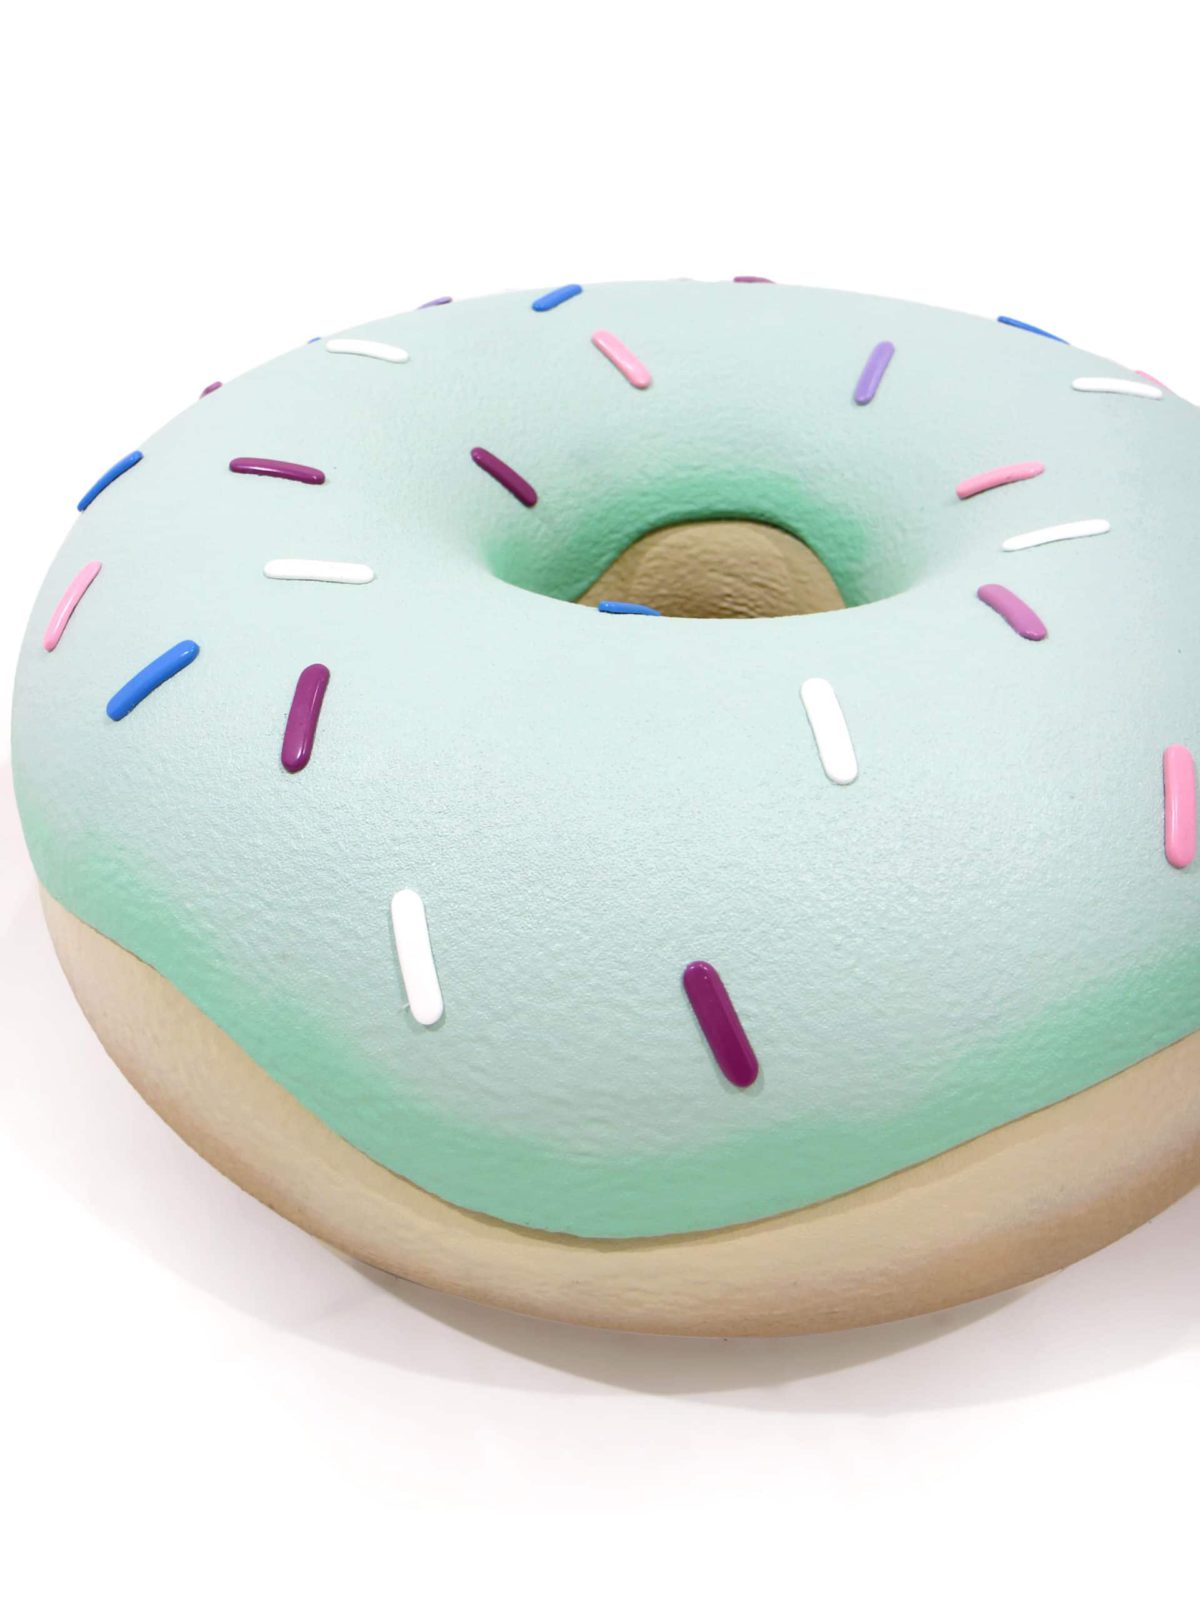 Giant Doughnut - Pastel Green